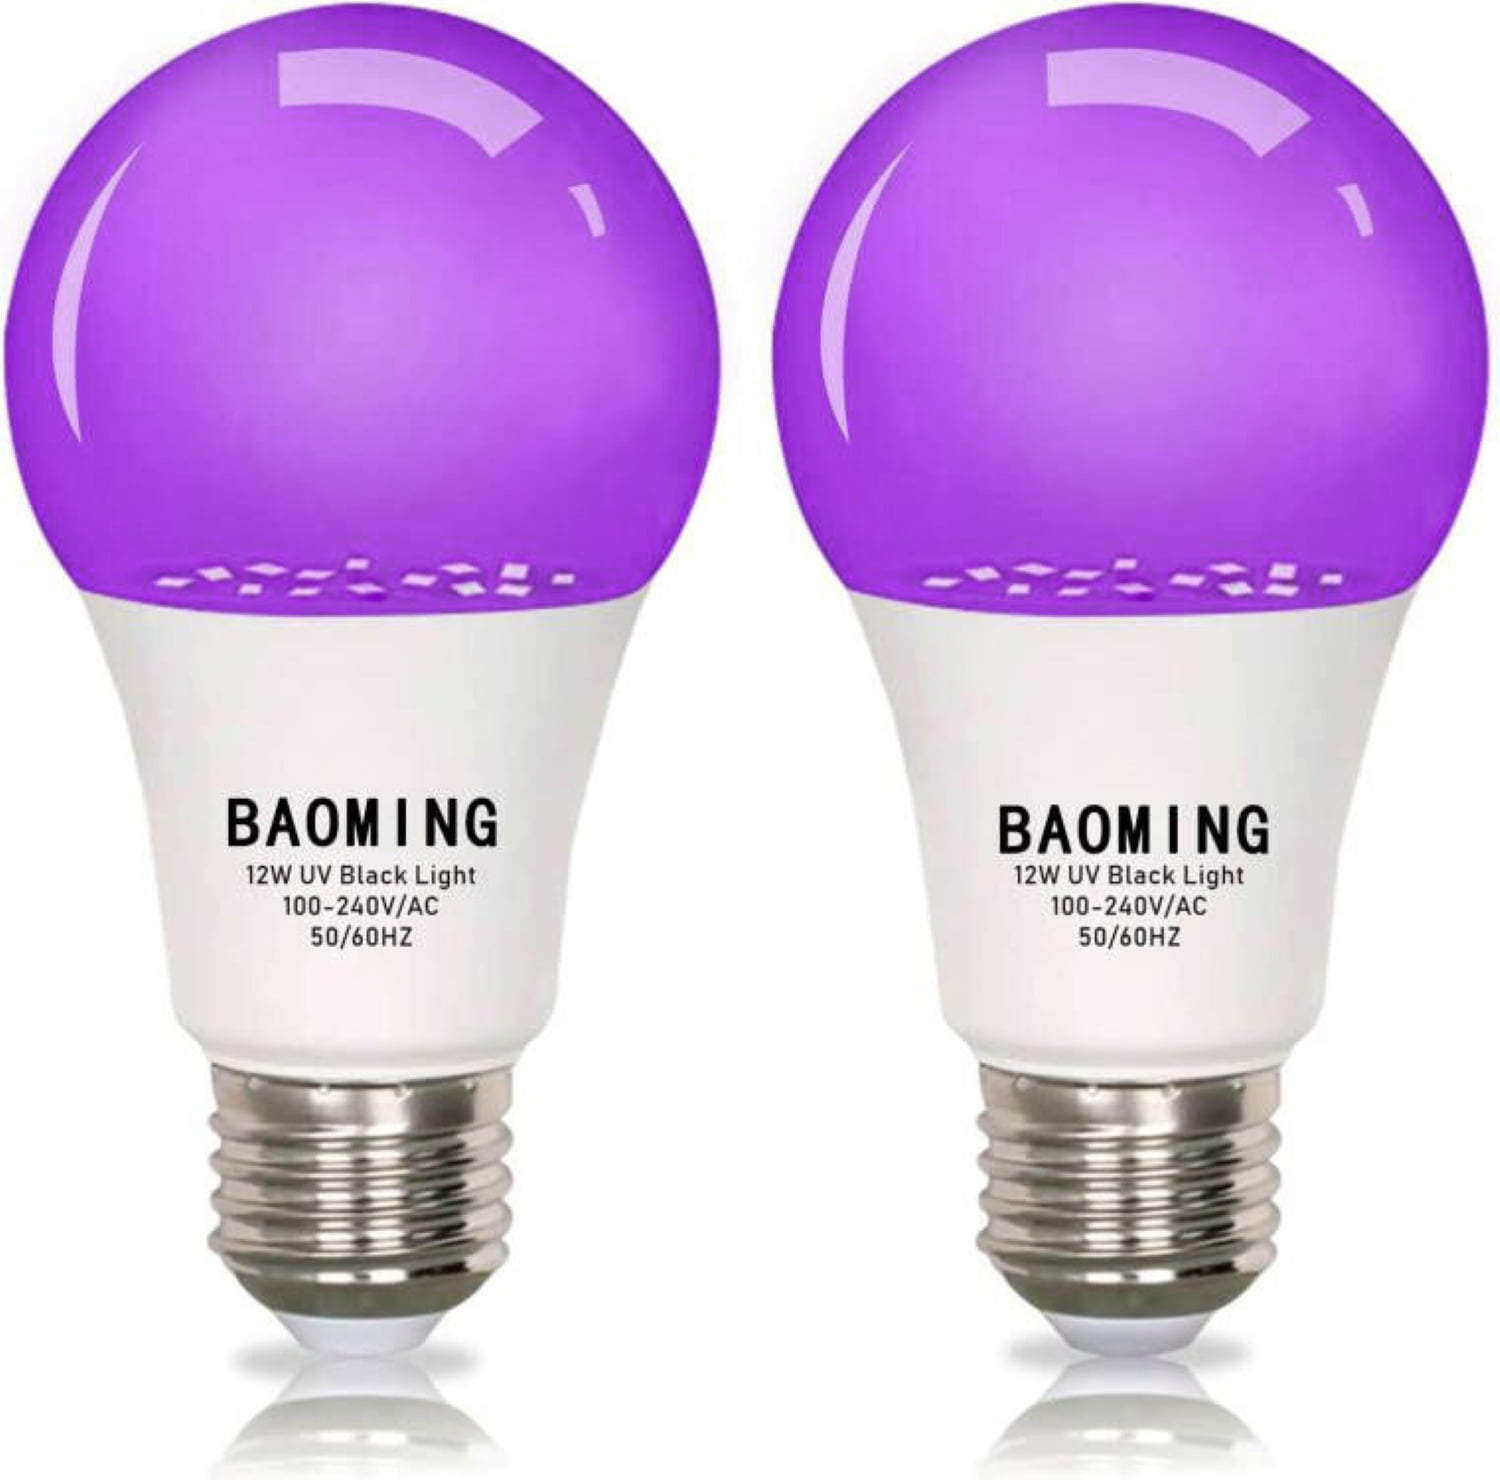 BAOMING Black Light Bulbs 15W LED,CFL UV Energy Saving E26 Base 120V,UVA  395-400nm, Glow in Dark,2 Pack 